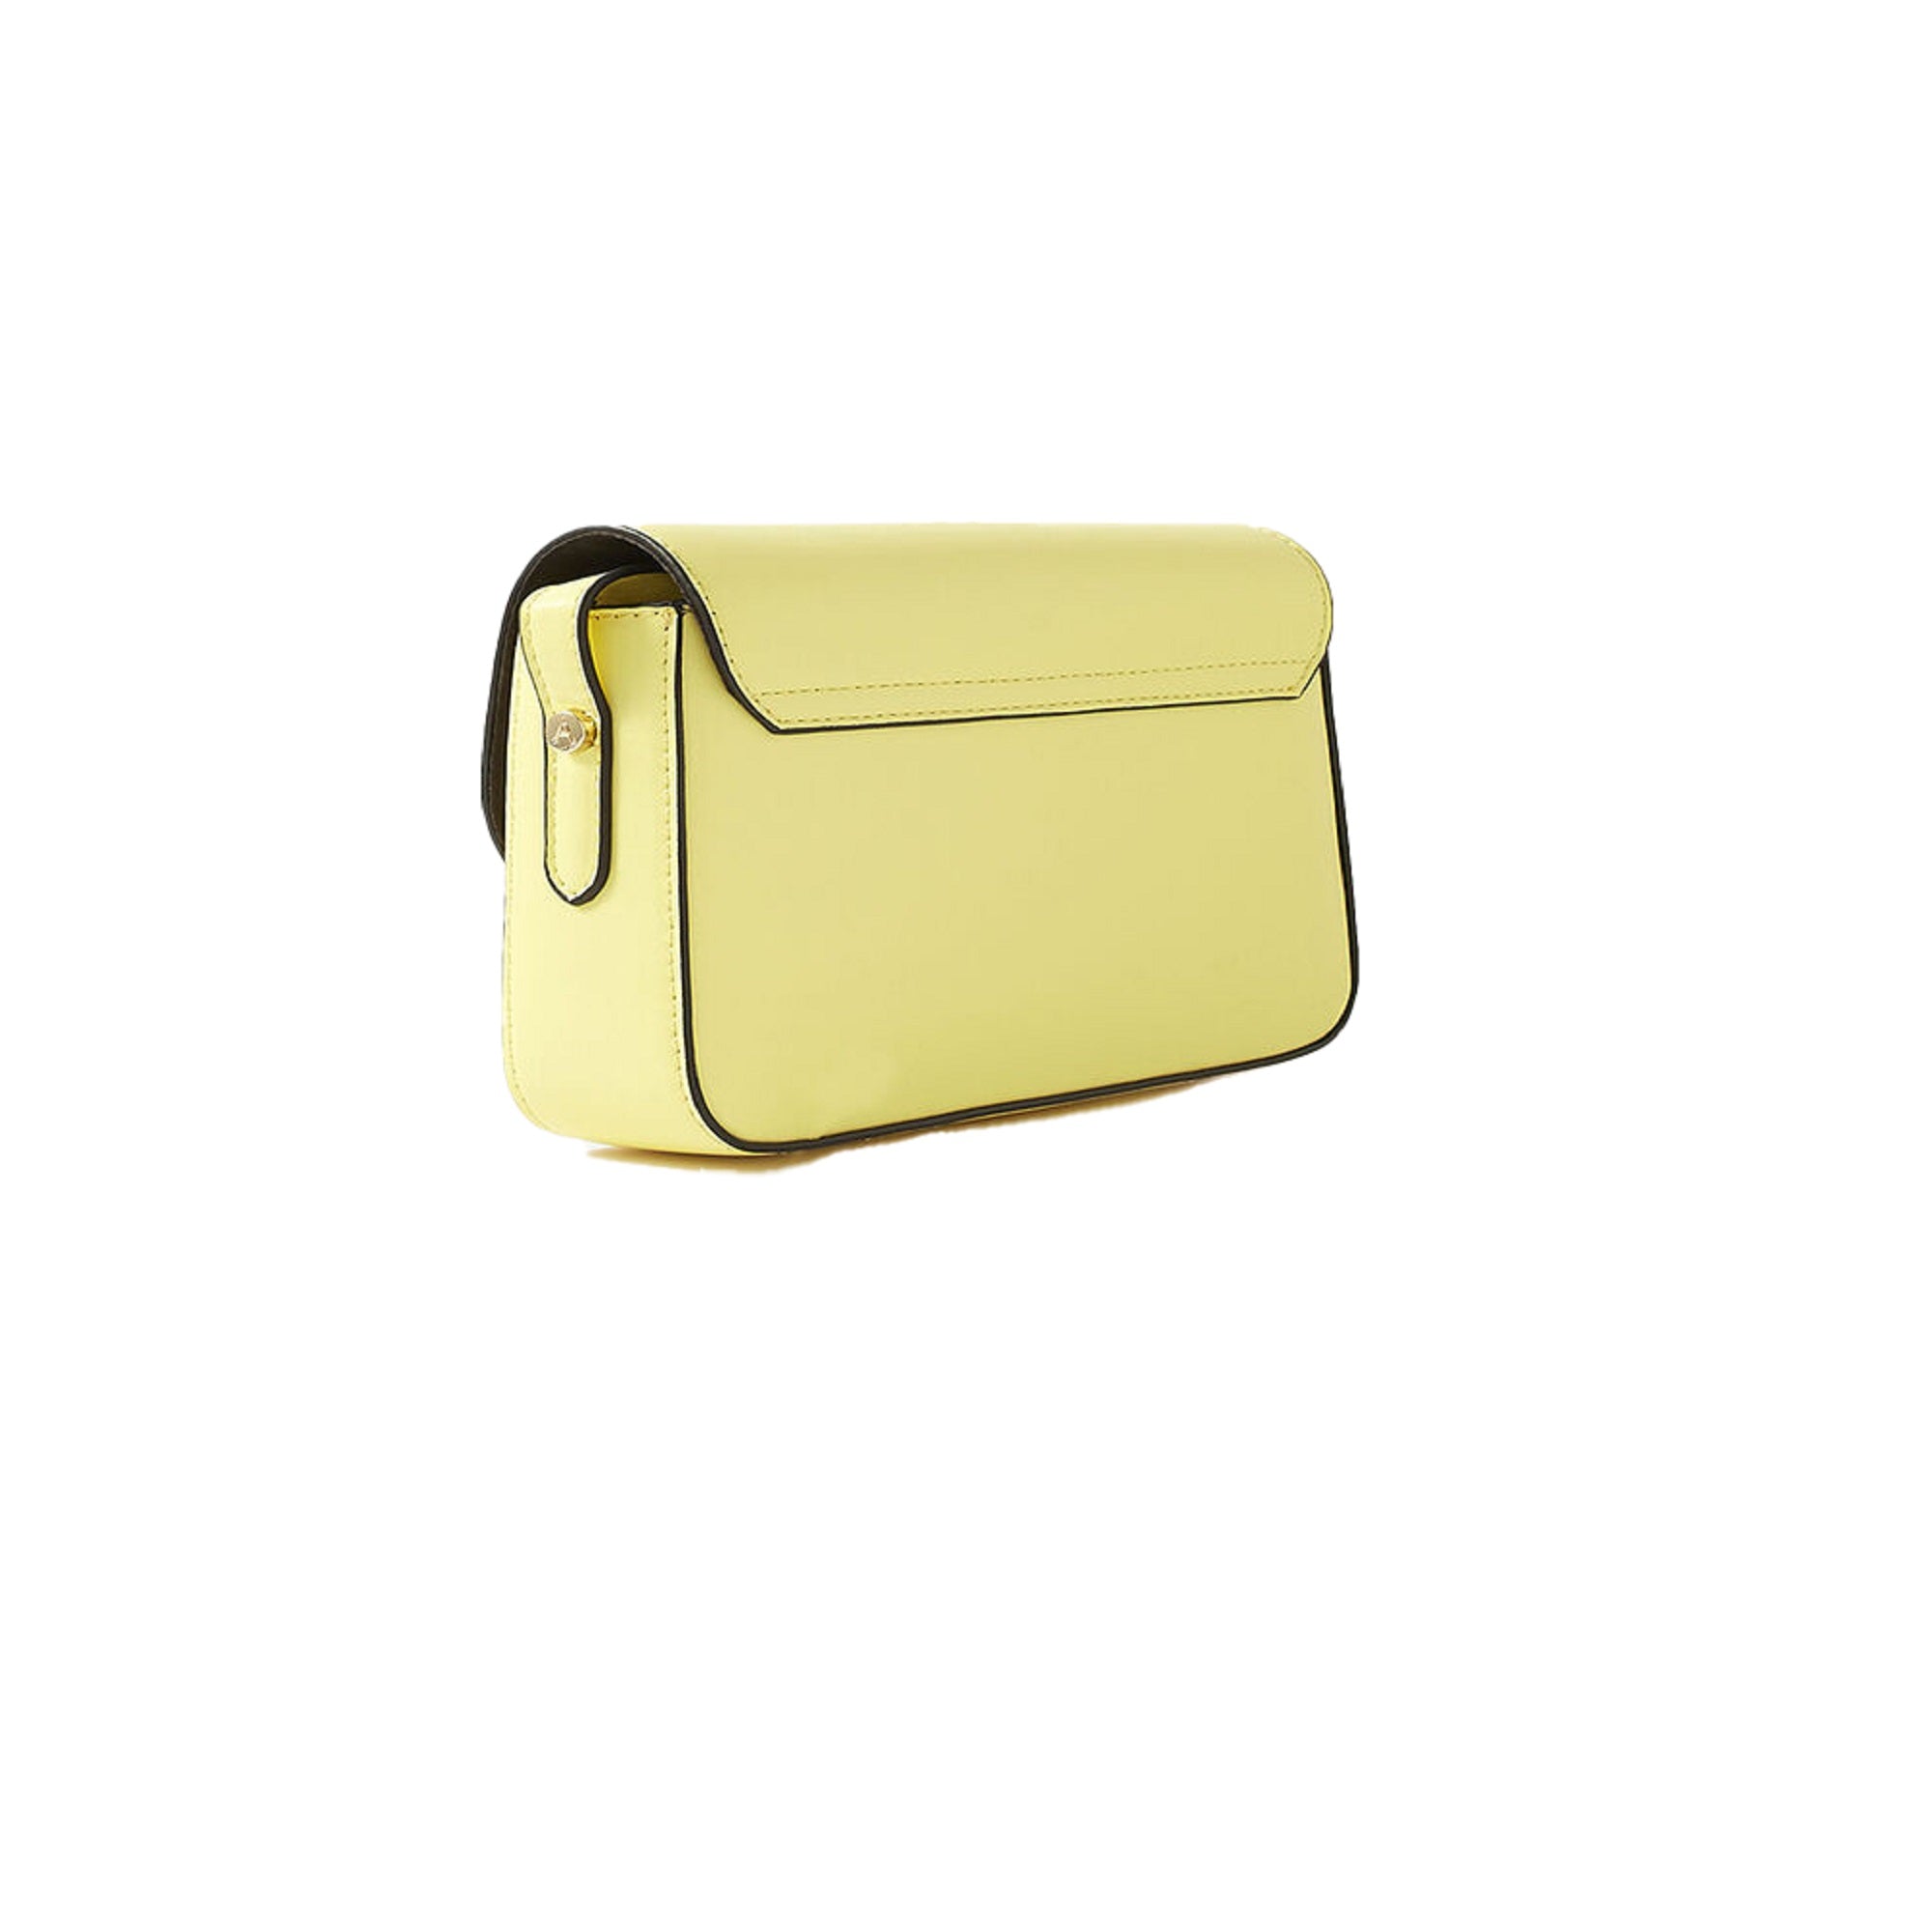 Accessorize London Women's Faux Leather Yellow Lexi Lock Sling bag